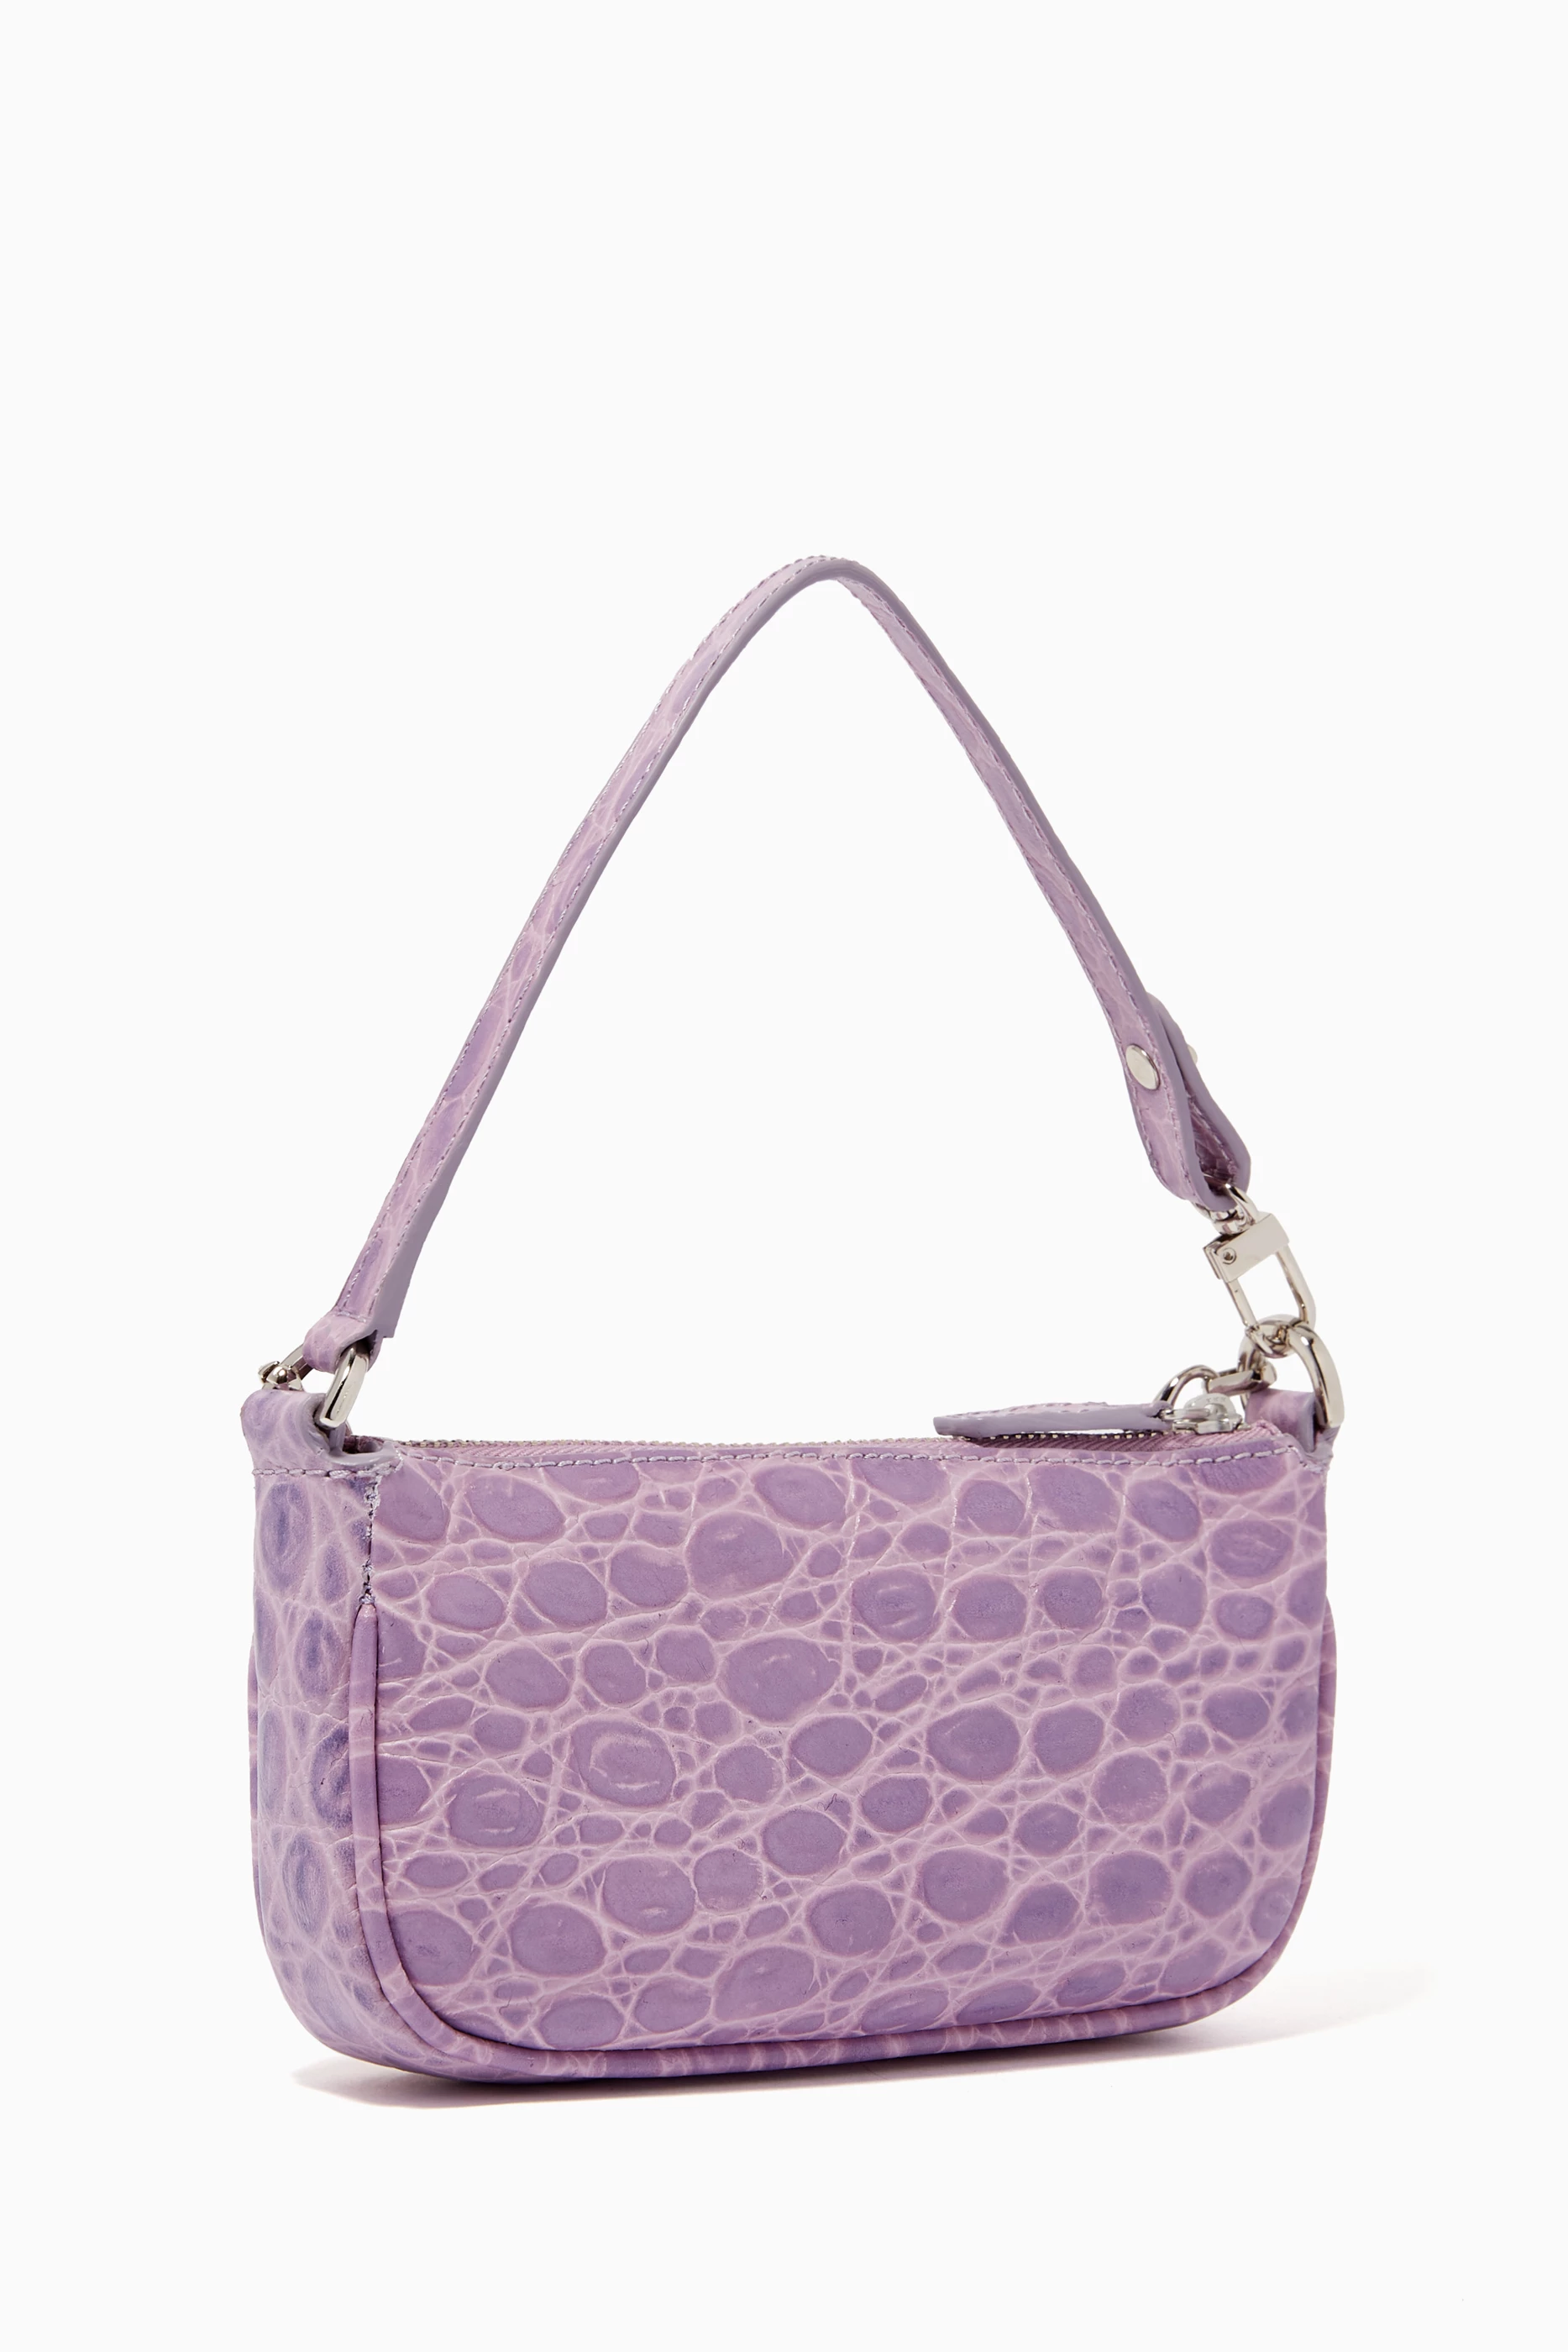 BY FAR Purple Croc Rachel Mini Bag